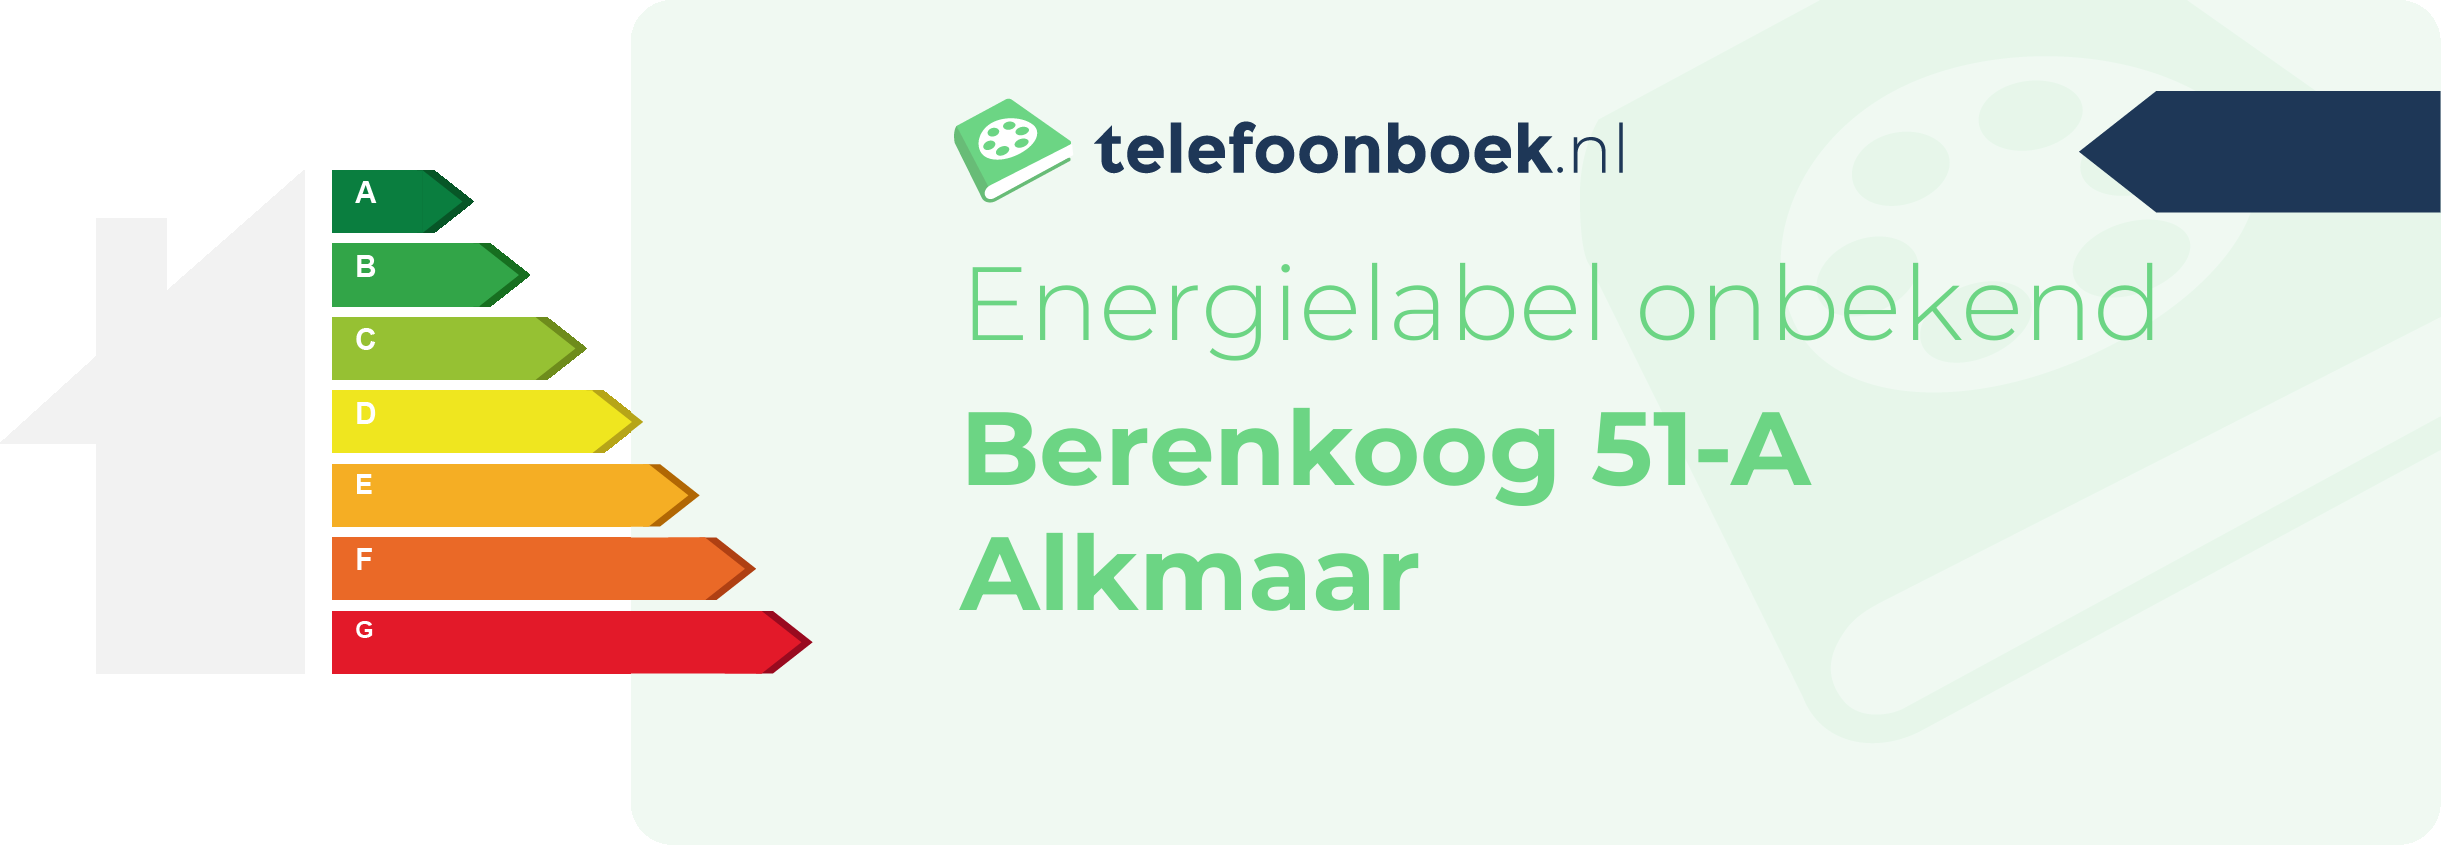 Energielabel Berenkoog 51-A Alkmaar